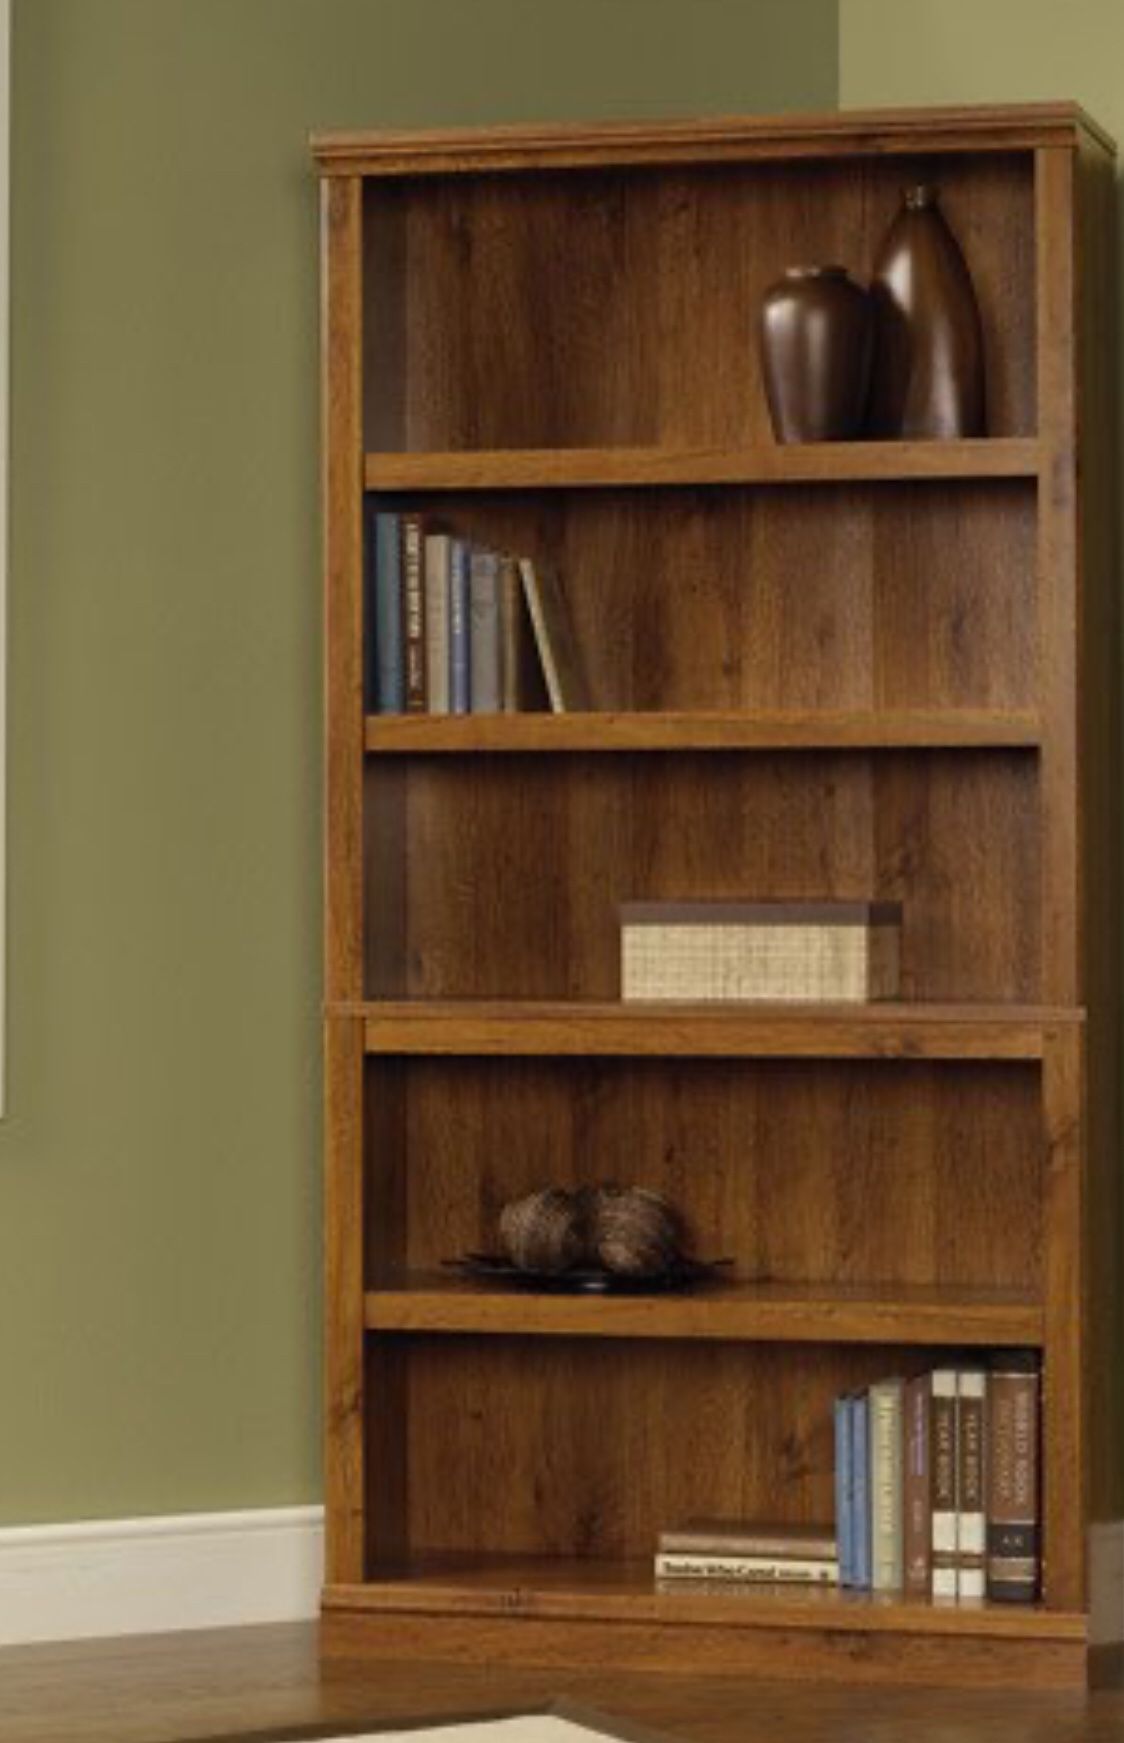 New!! Bookcase, bookshelves, organizer, storage unit , 5 shelves bookcase, shelving display, living room furniture, oak,